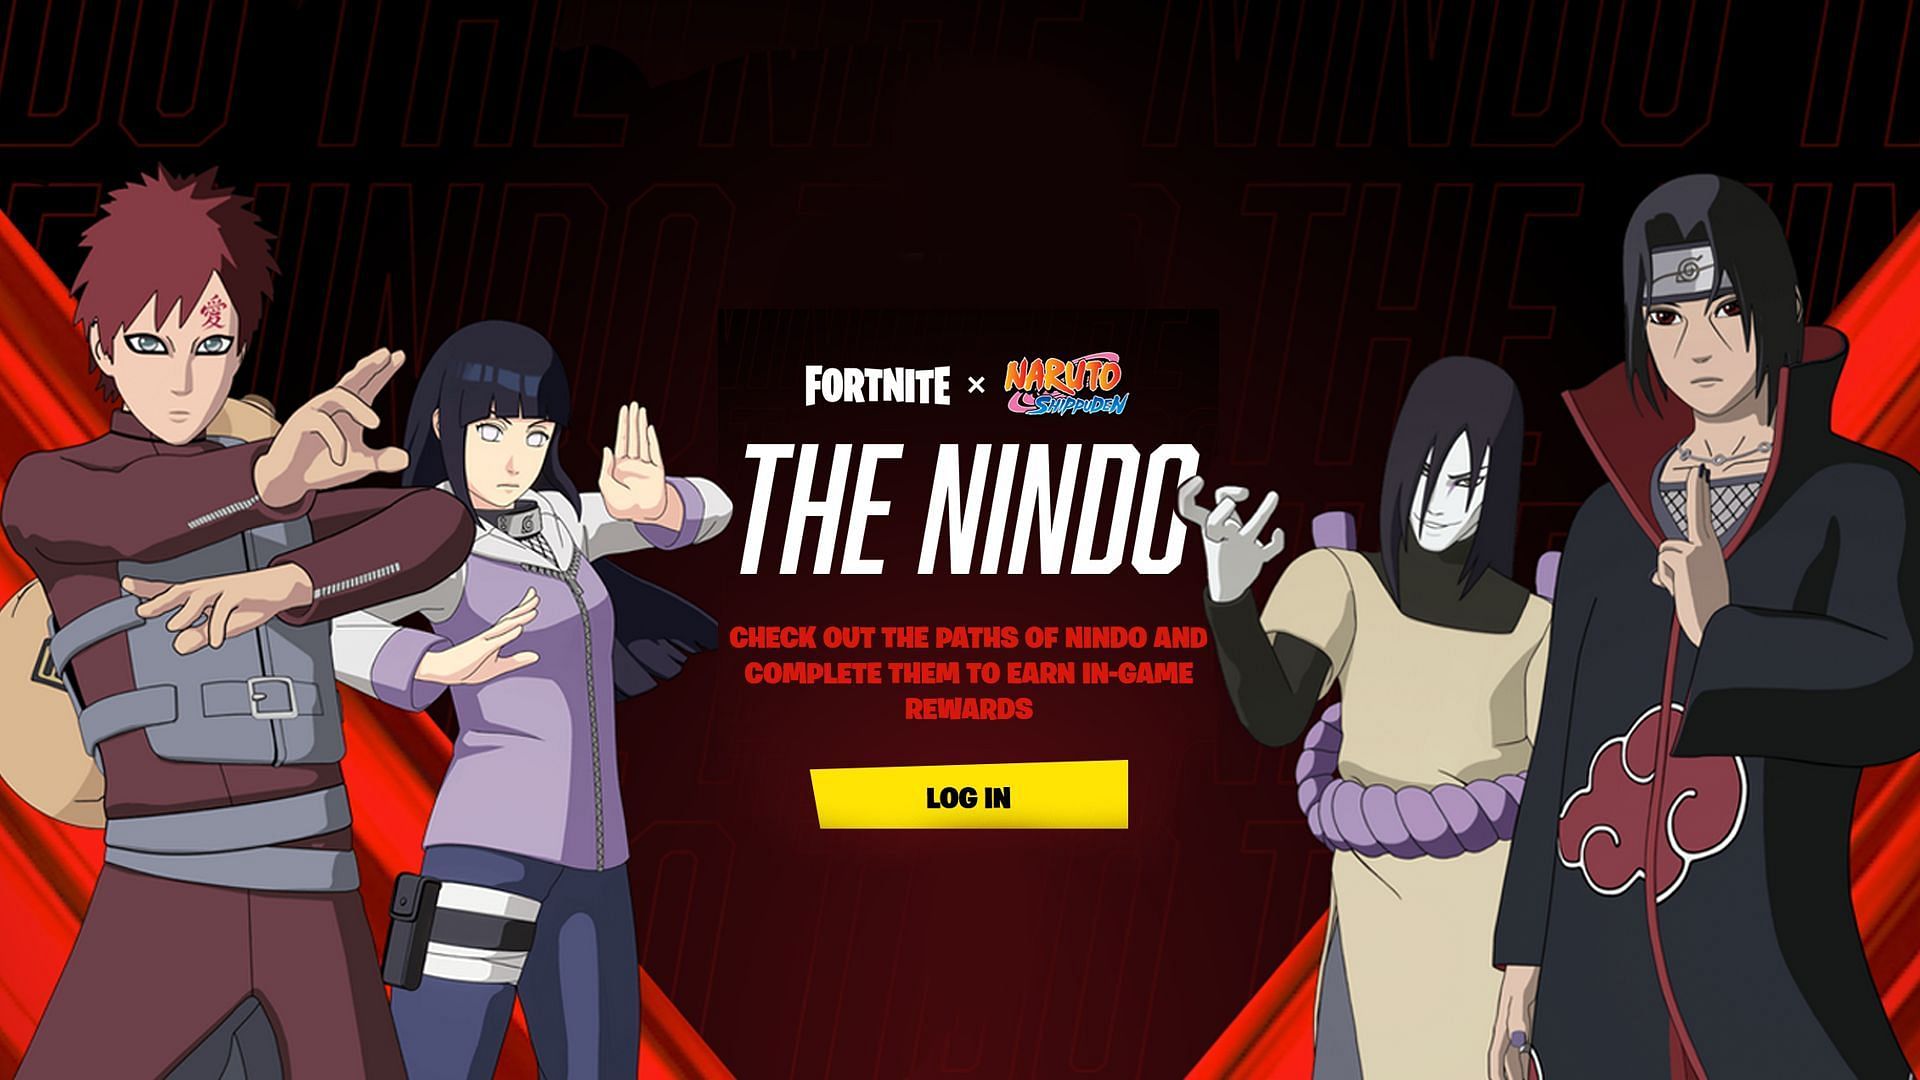 Fortnite x Naruto: The Nindo challenges grant free cosmetics and